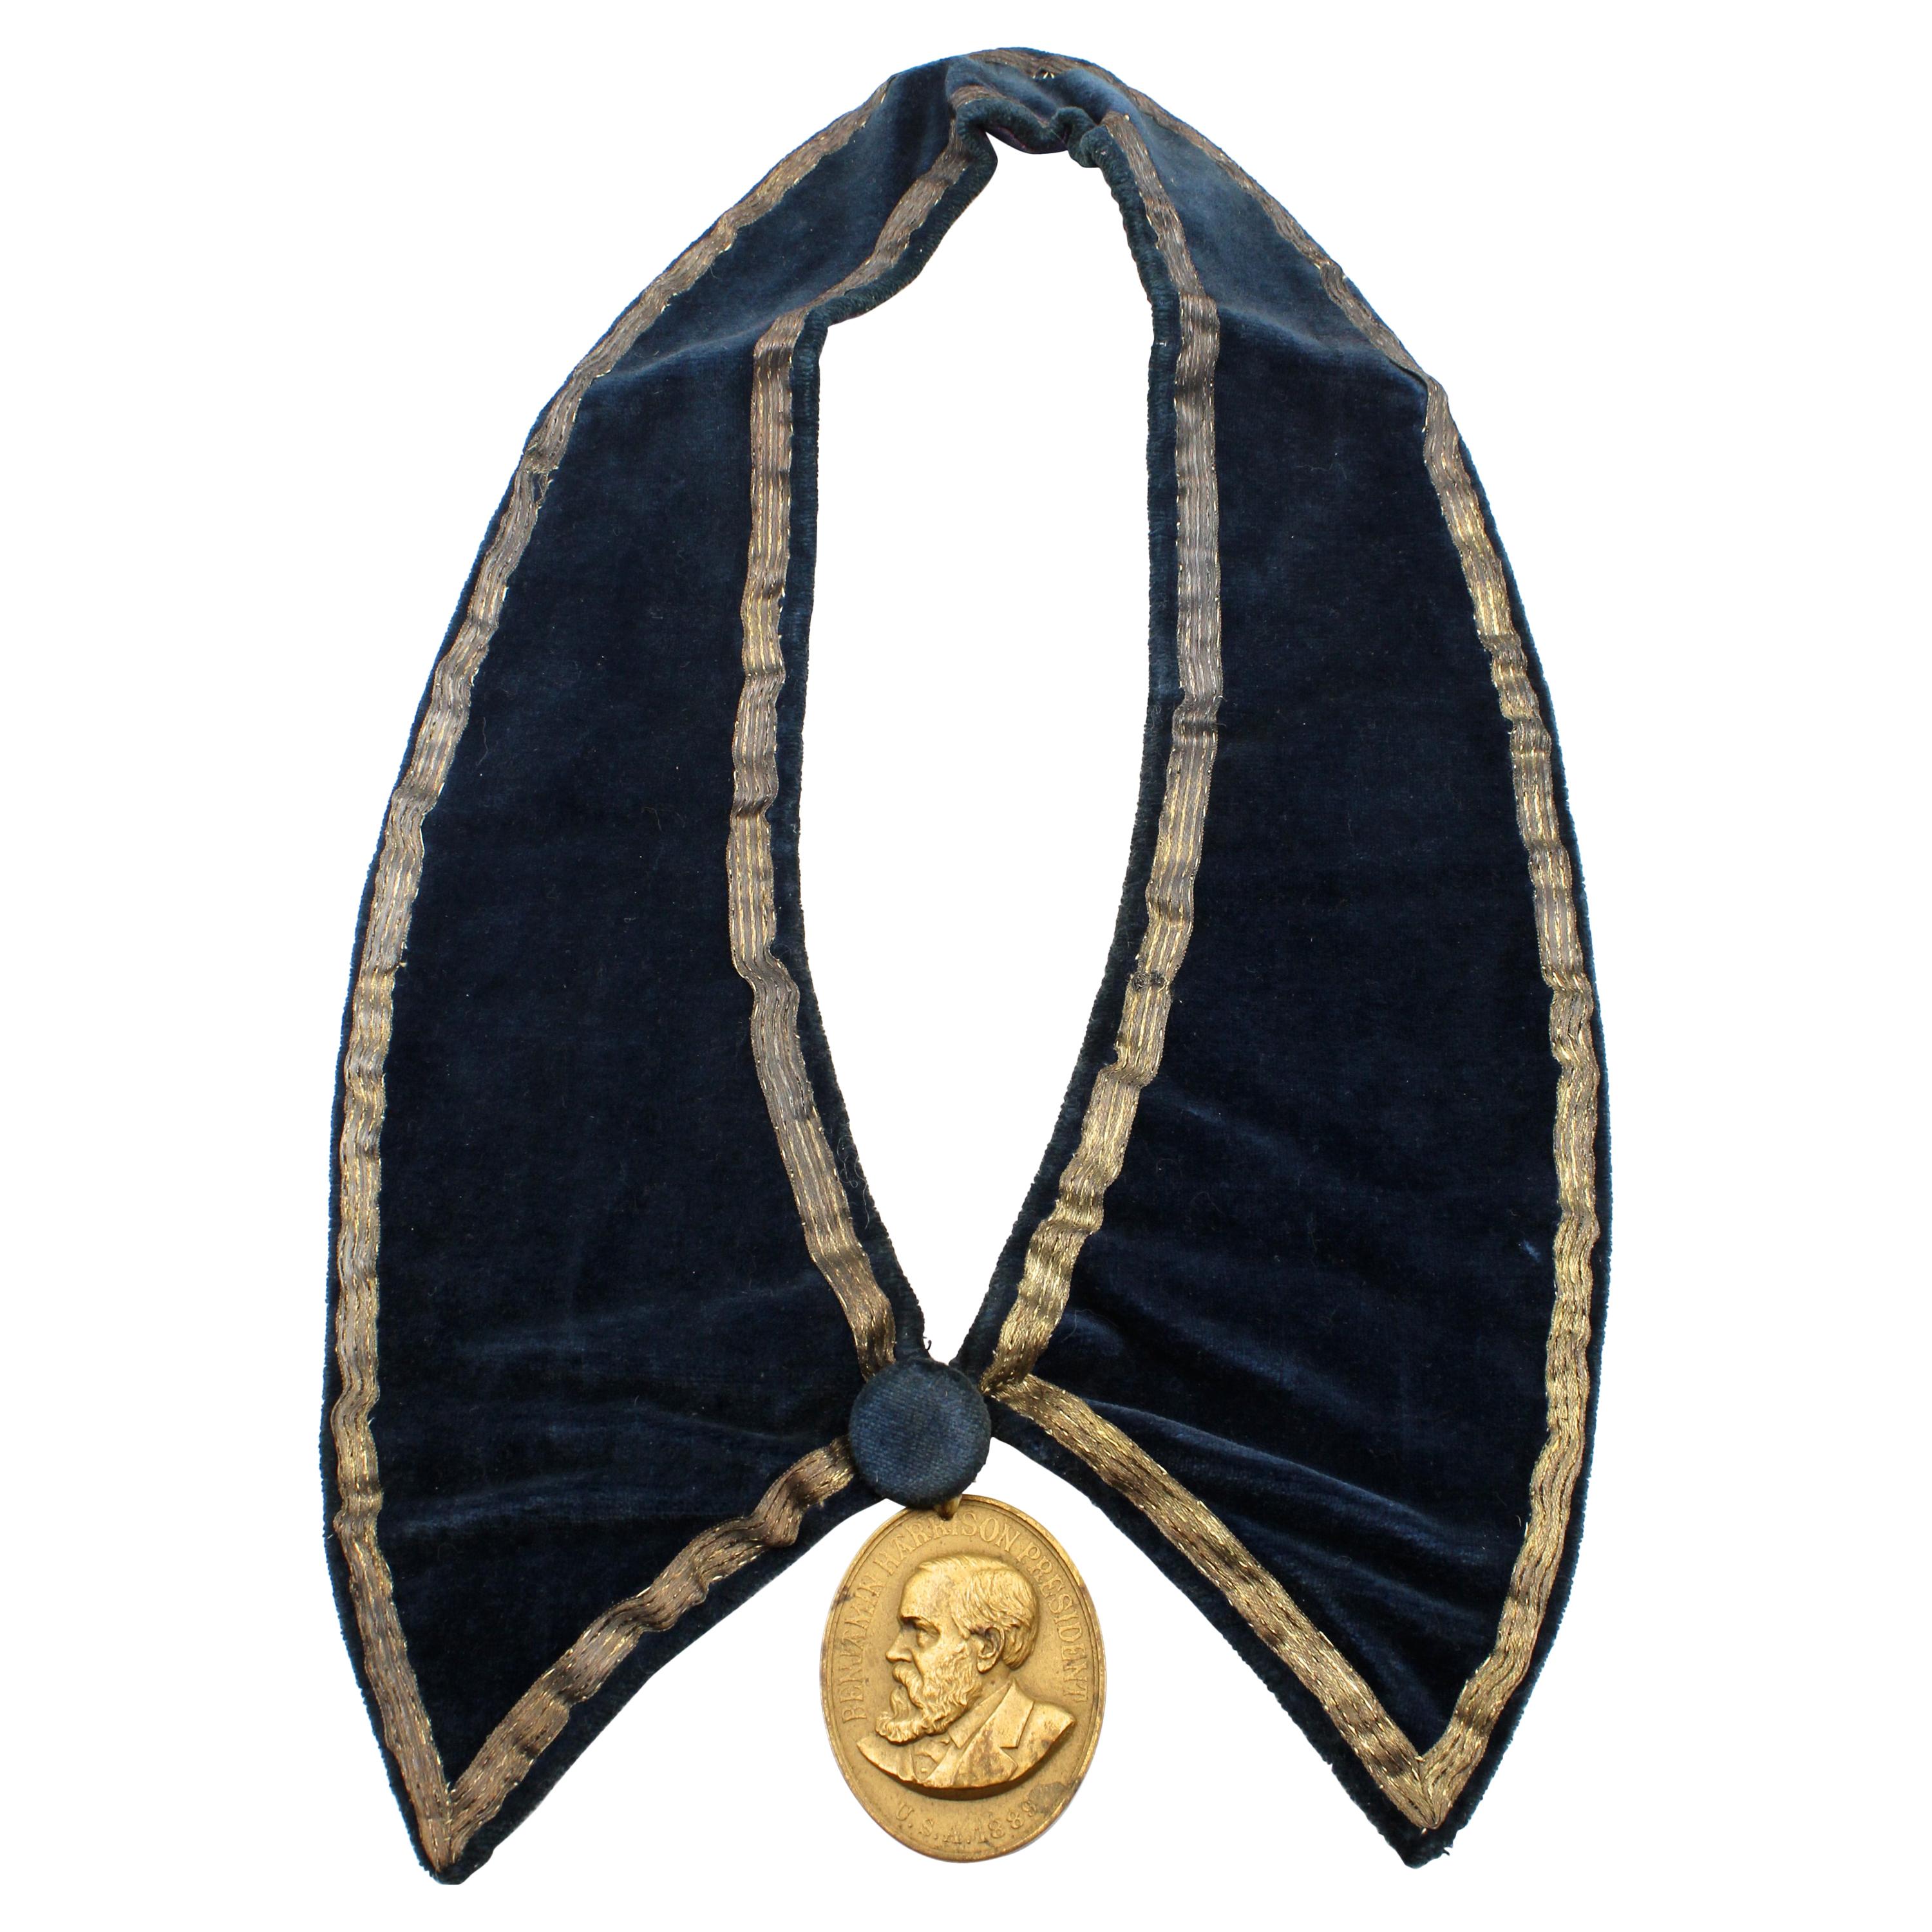 Benjamin Harrison Indian Peace Medal on Presentation Collar, 1889